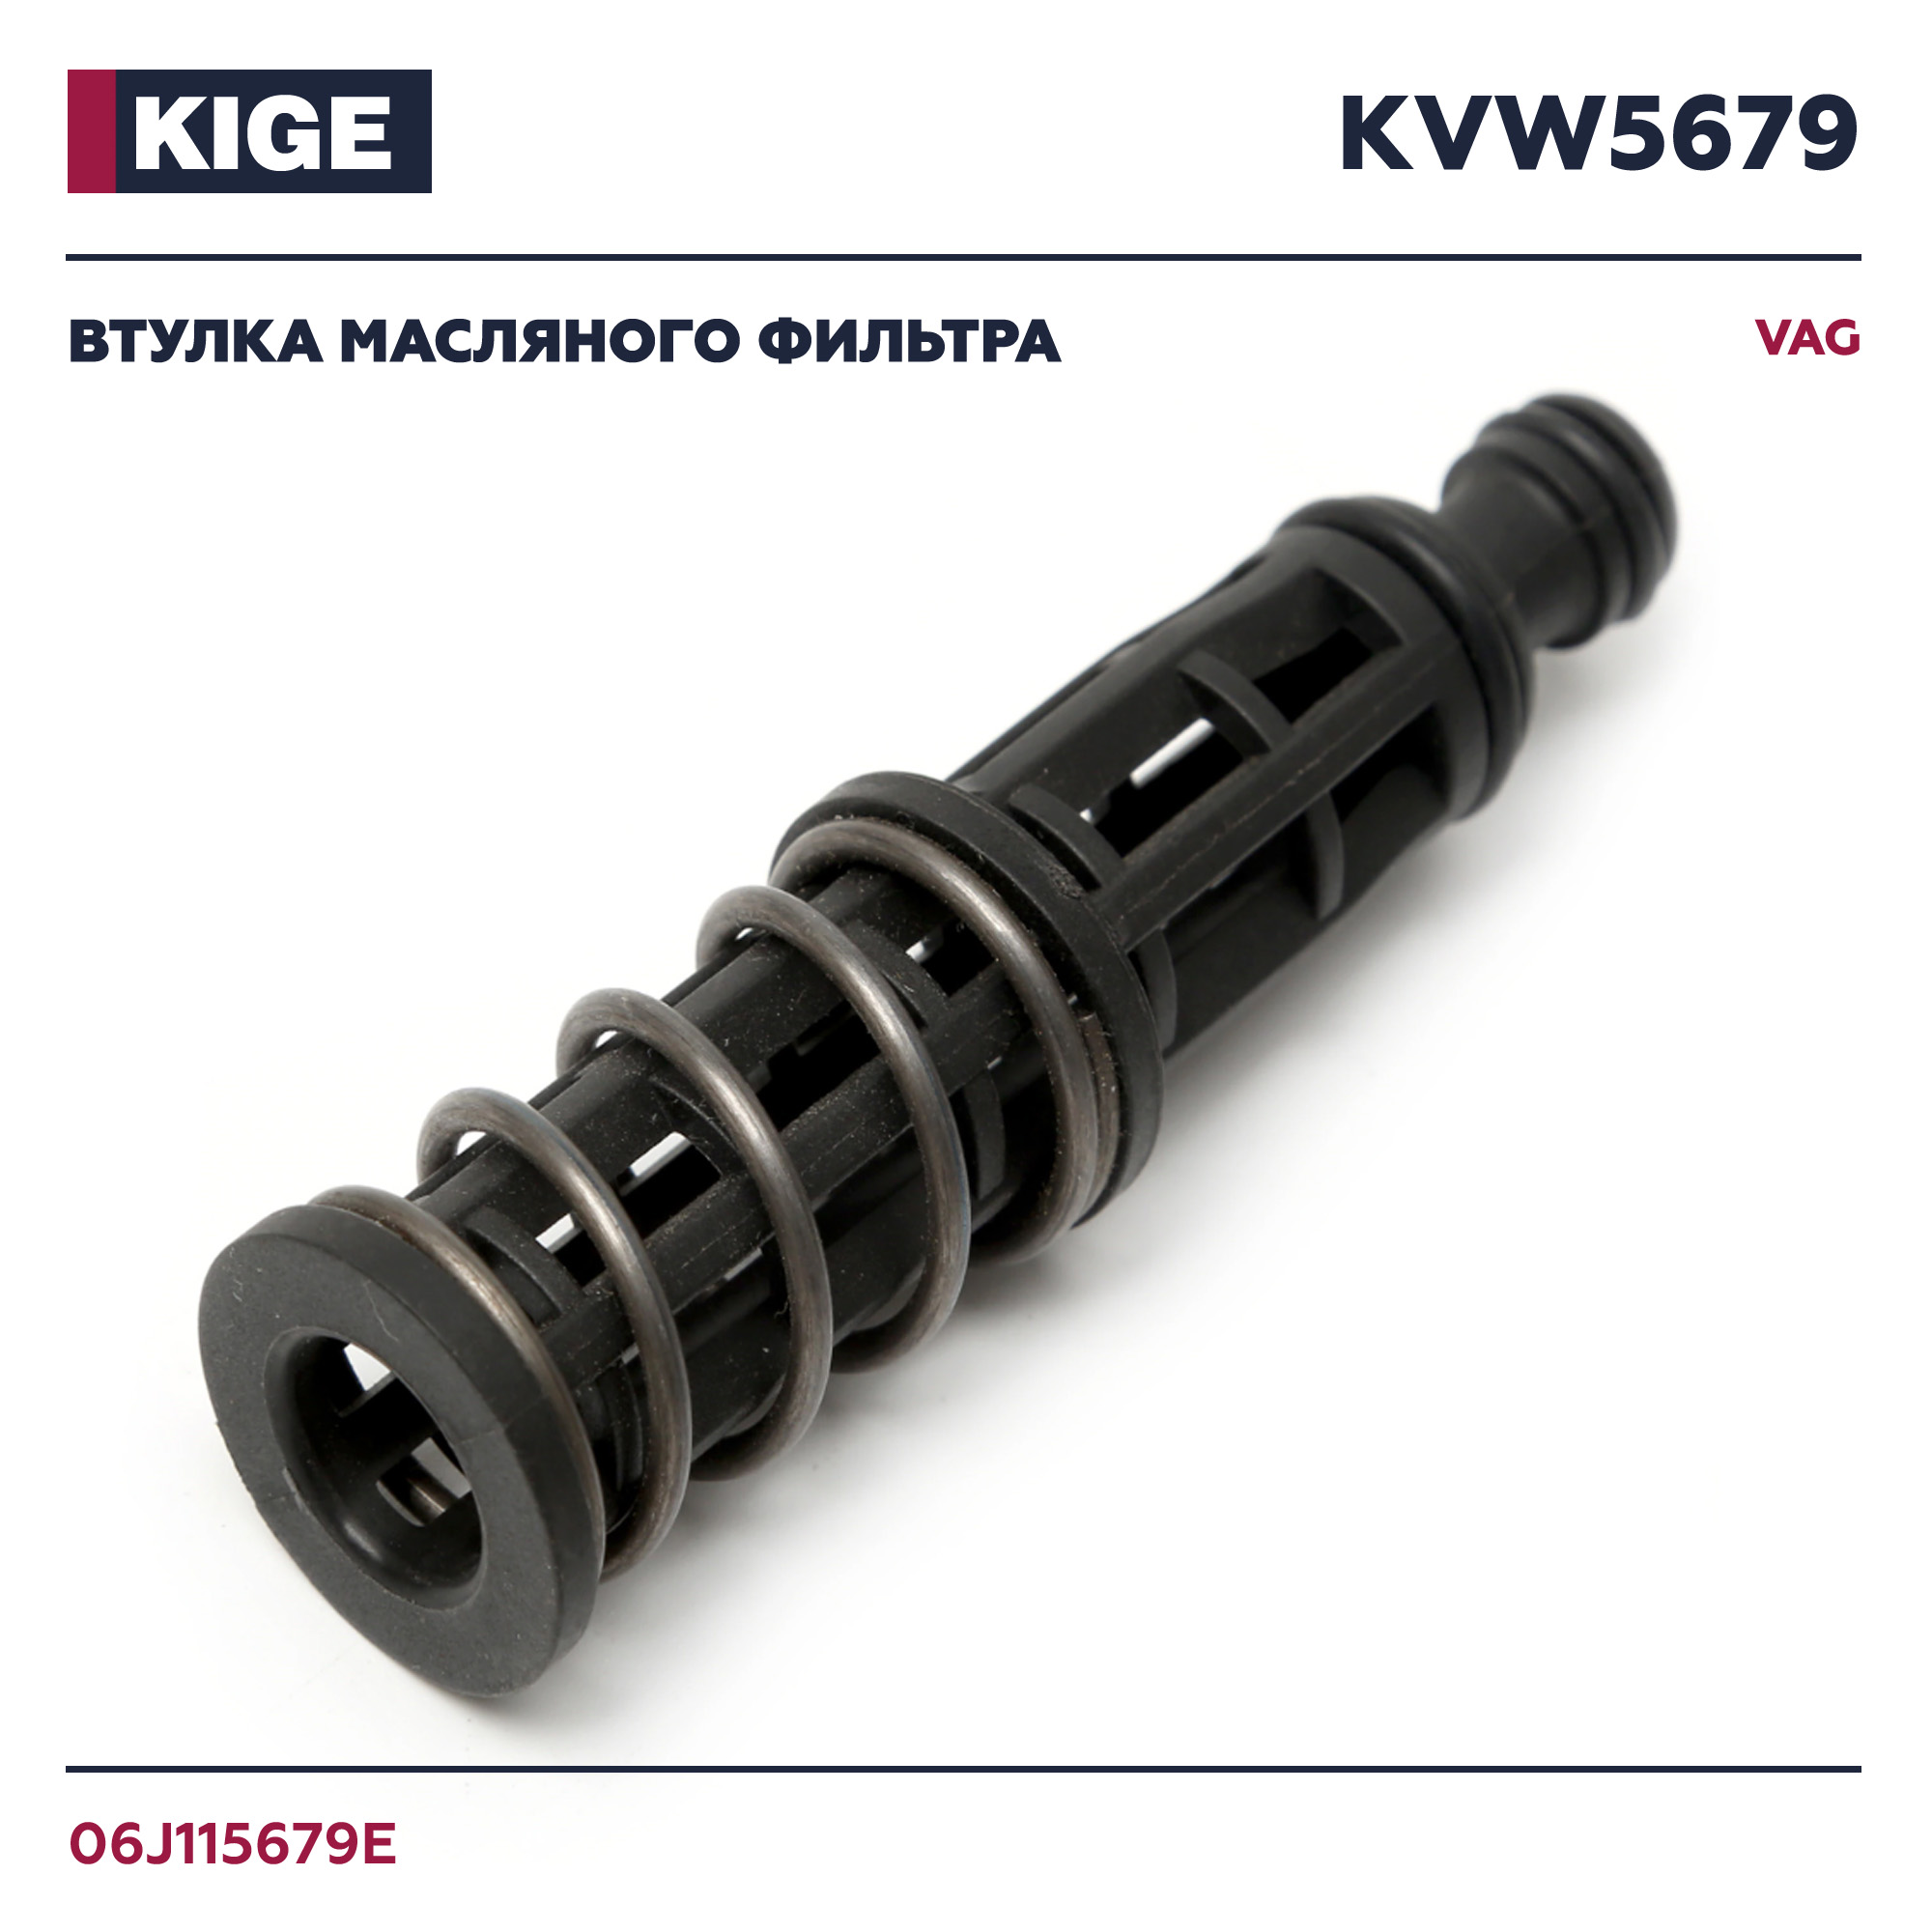 Трубка масляного фильтра Kige KVW5679 для VAG 06J115679E VW Audi Skoda Seat